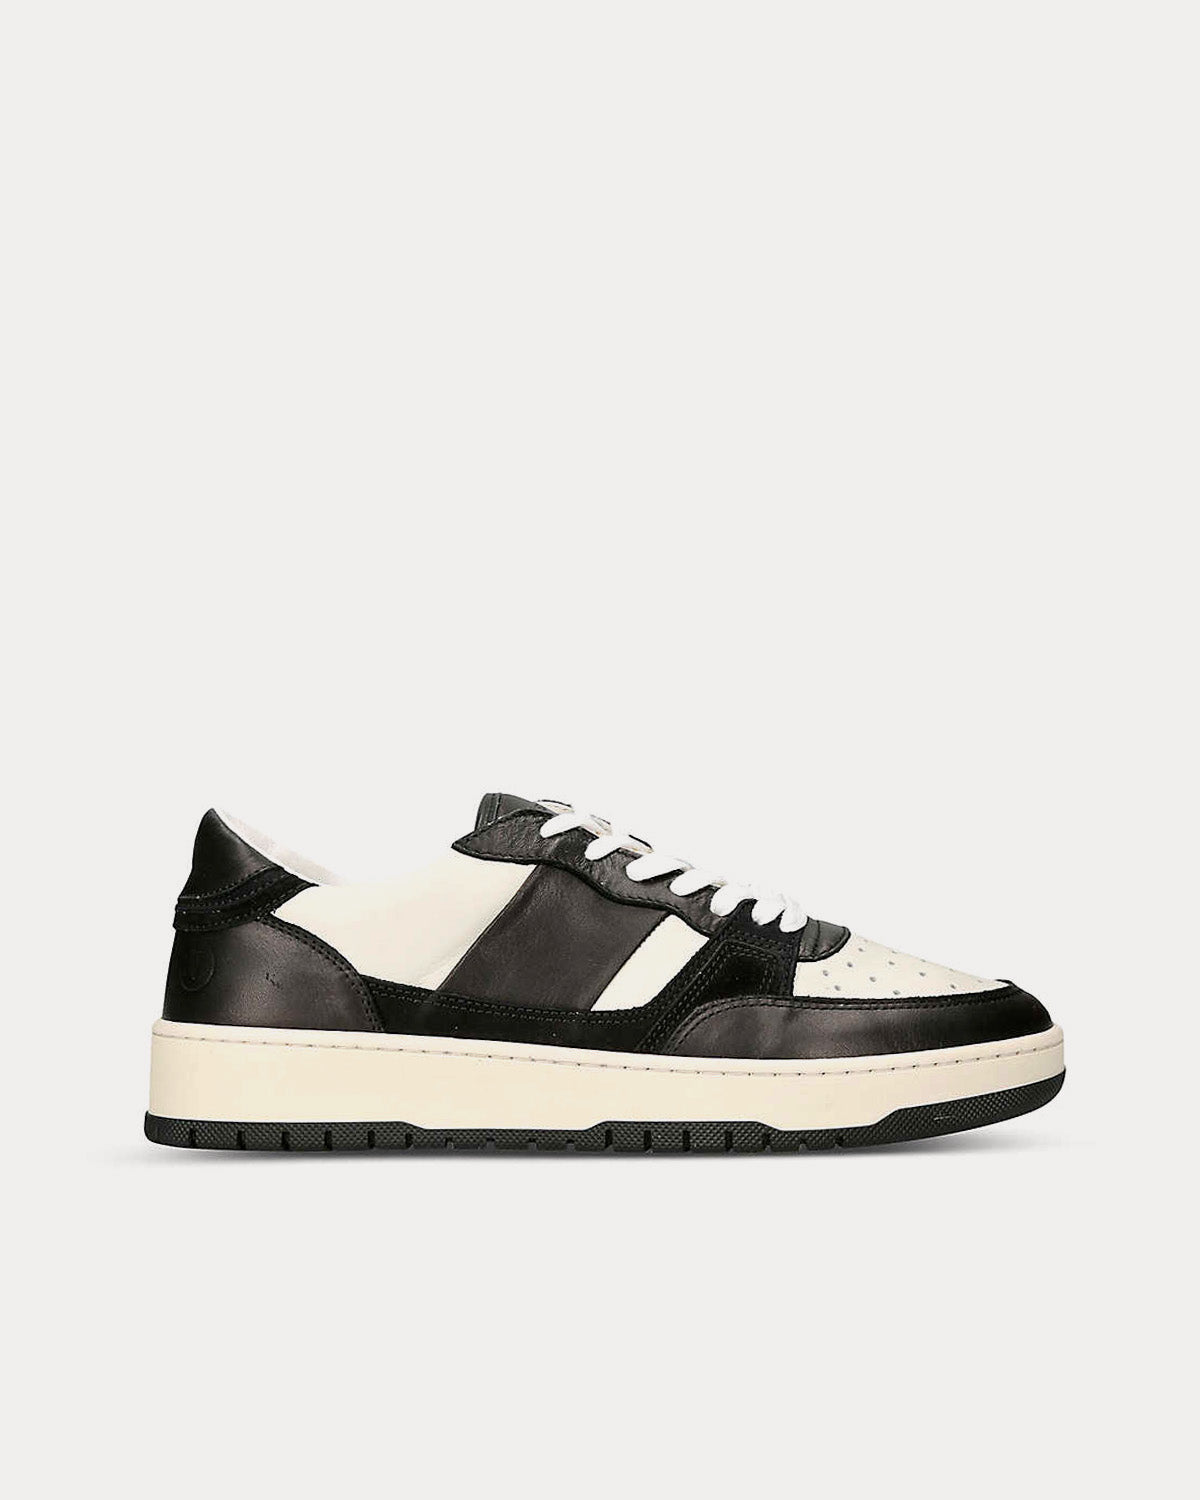 Collegium - Alpha Leather & Suede Black / White Low Top Sneakers